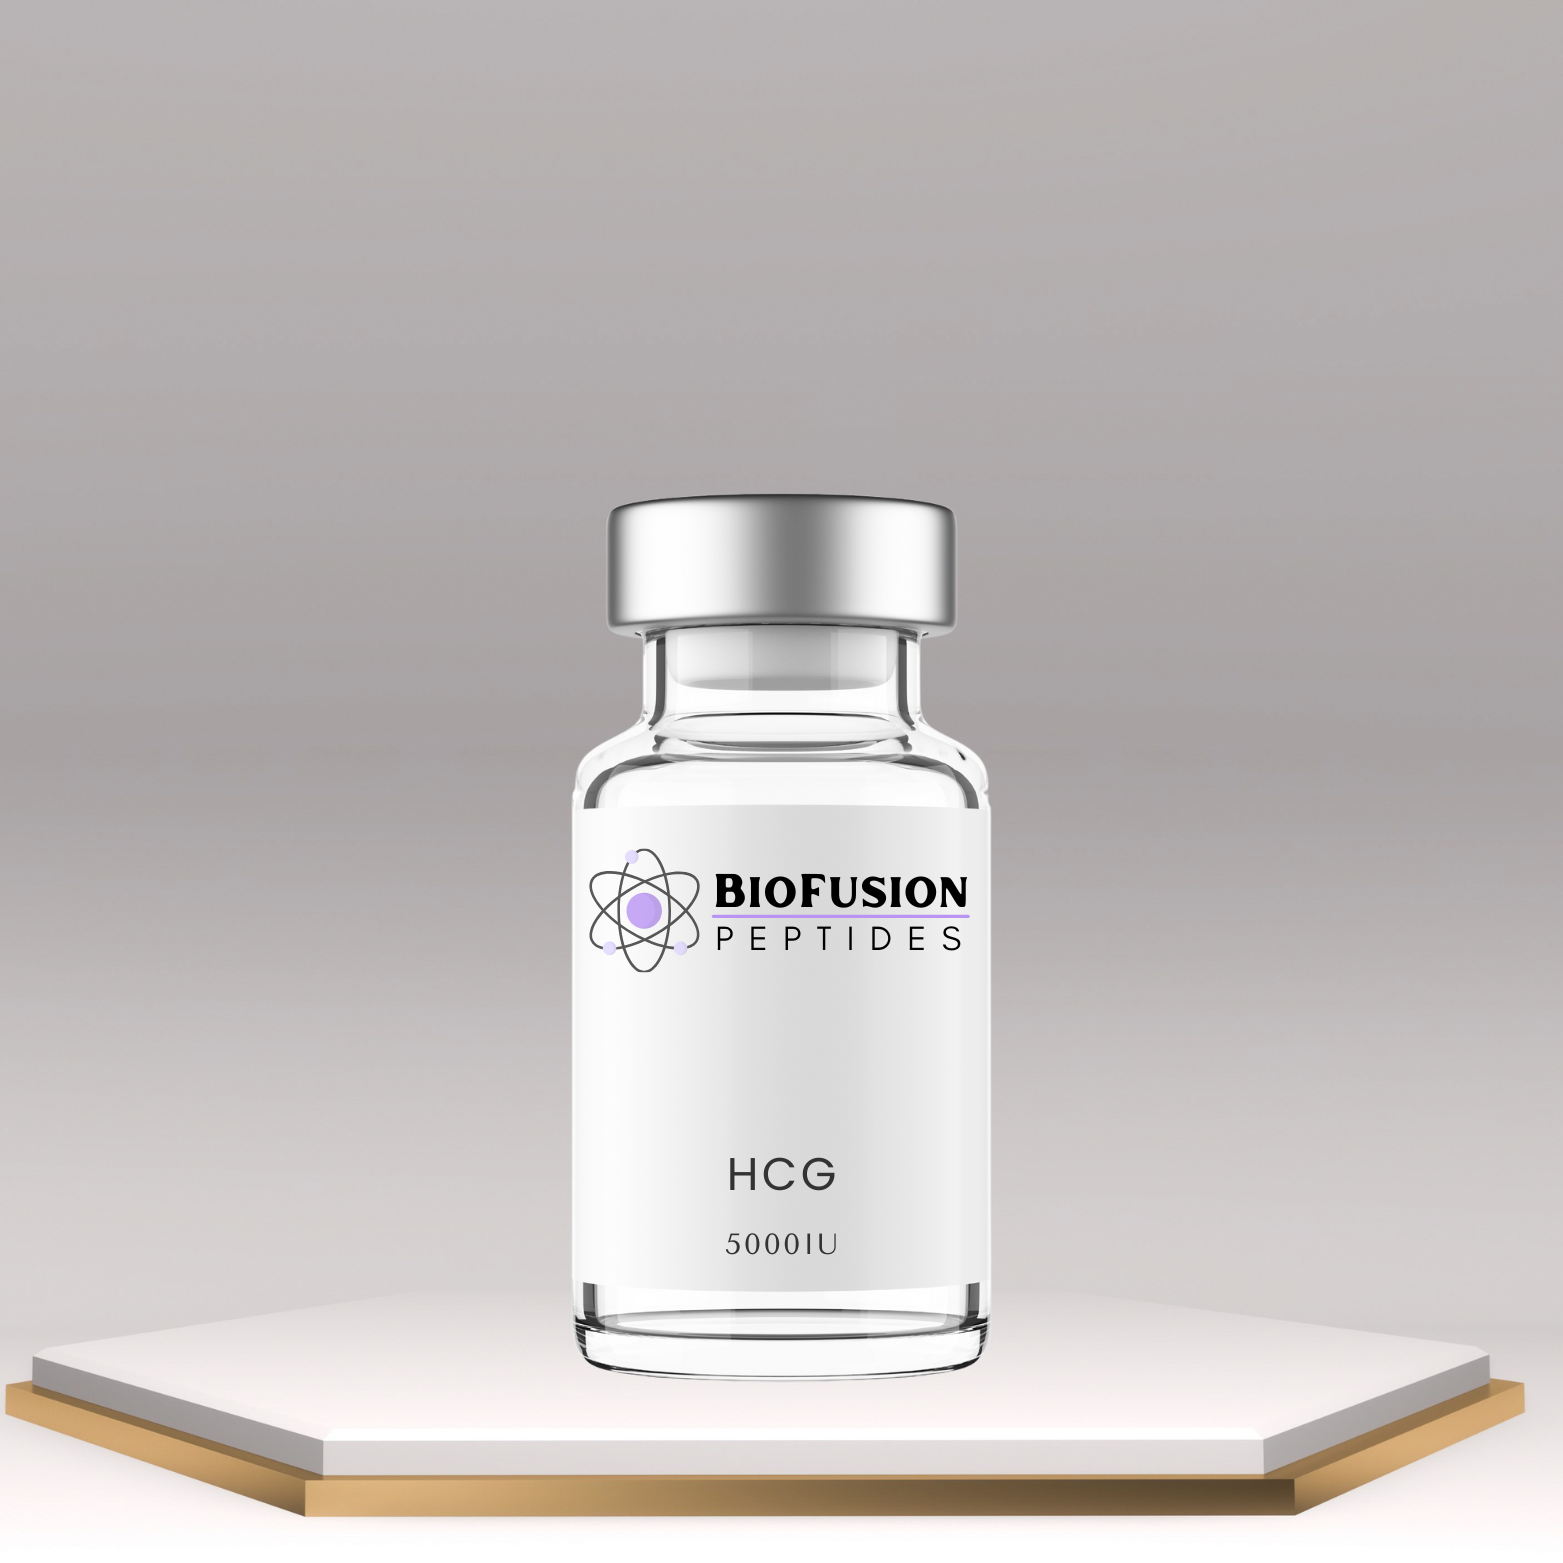 BioFusion Peptides HCG 5000IU vial